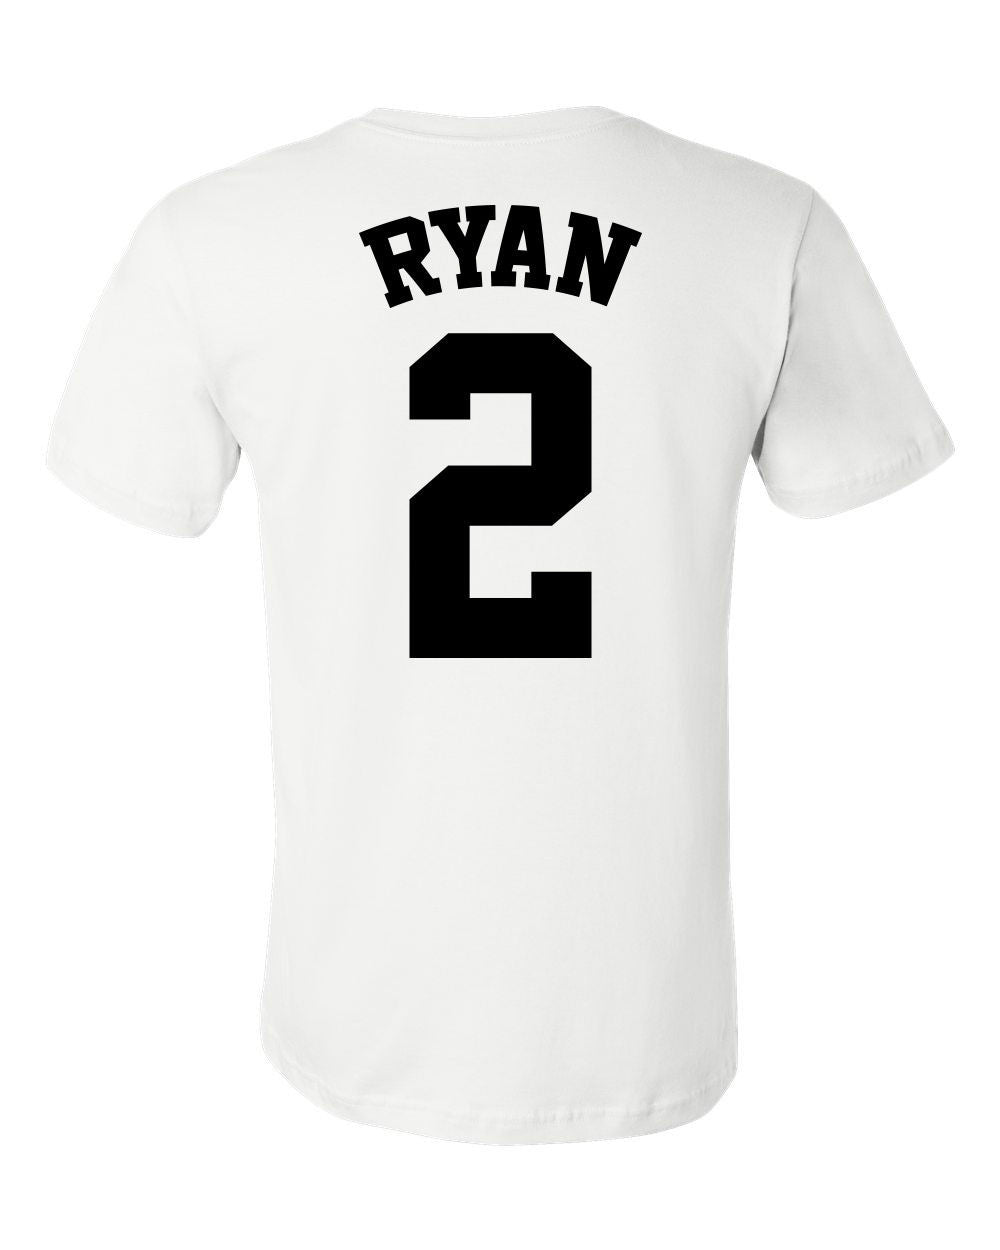 Matt Ryan black jersey